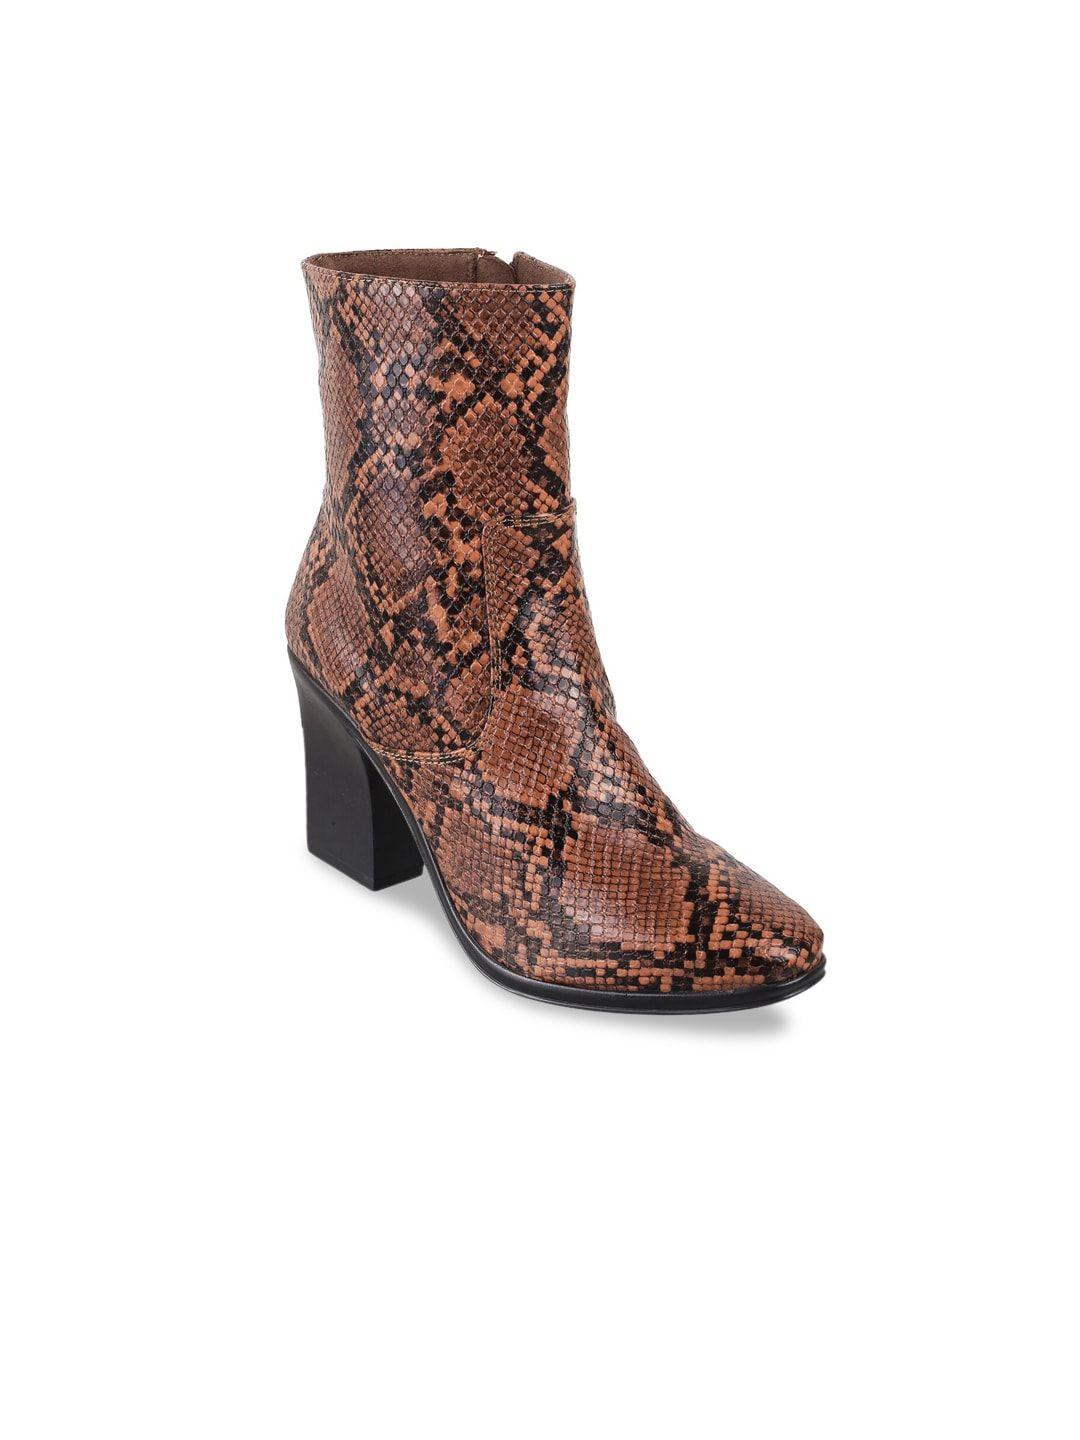 catwalk-tan-animal-textured-&-printed-block-heeled-boots-with-zip